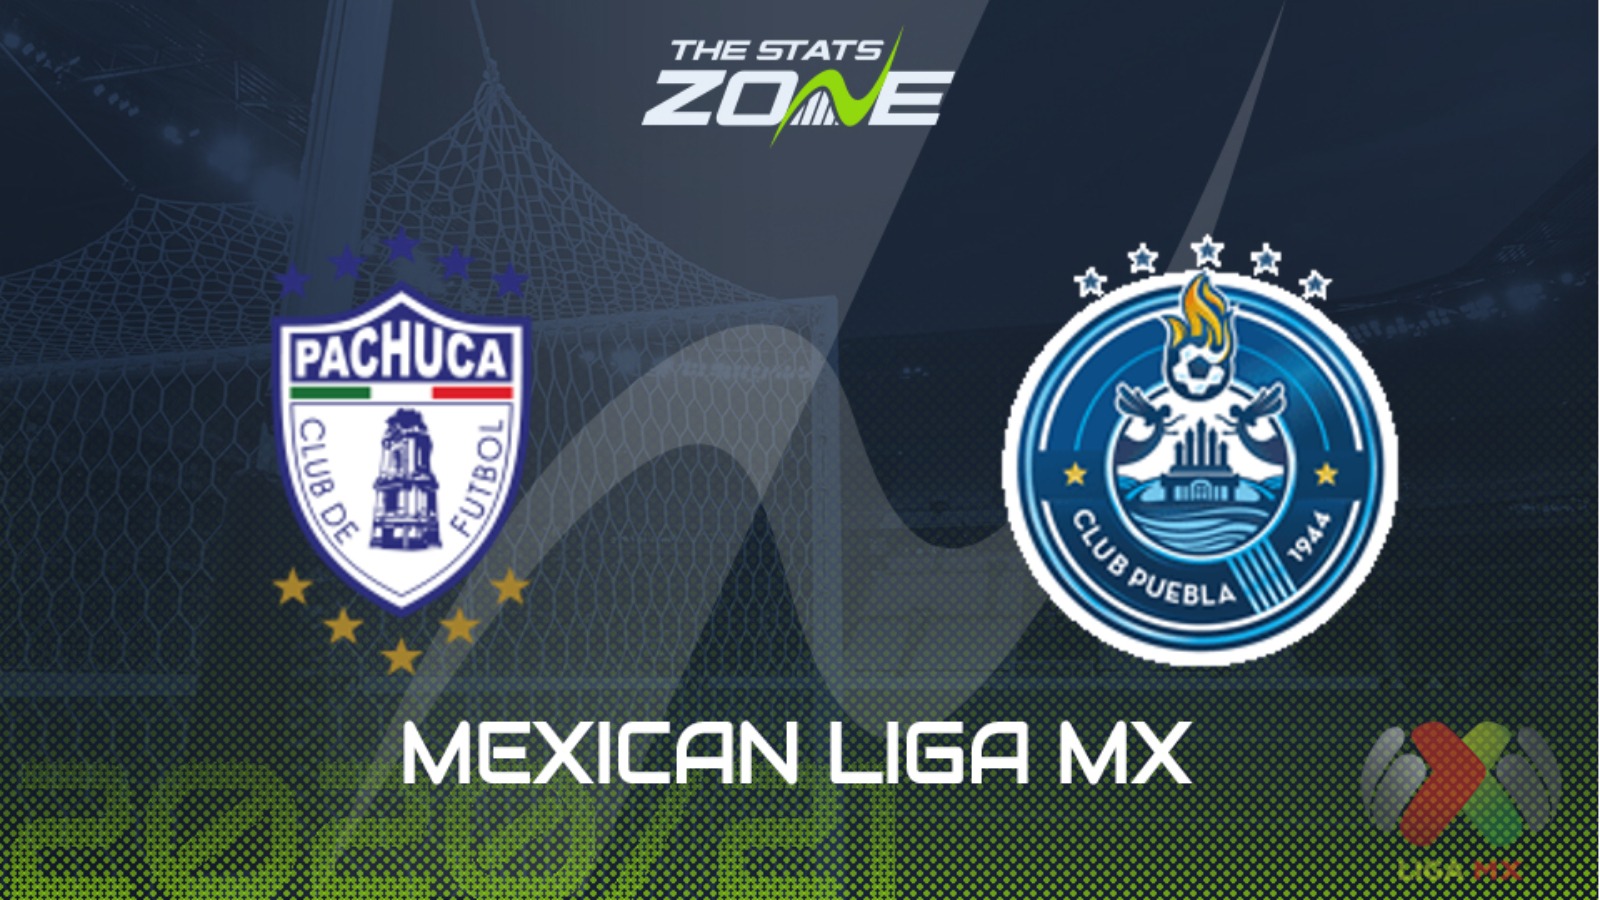 2020-21 Mexican Liga MX – Pachuca vs Puebla Preview & Prediction - The